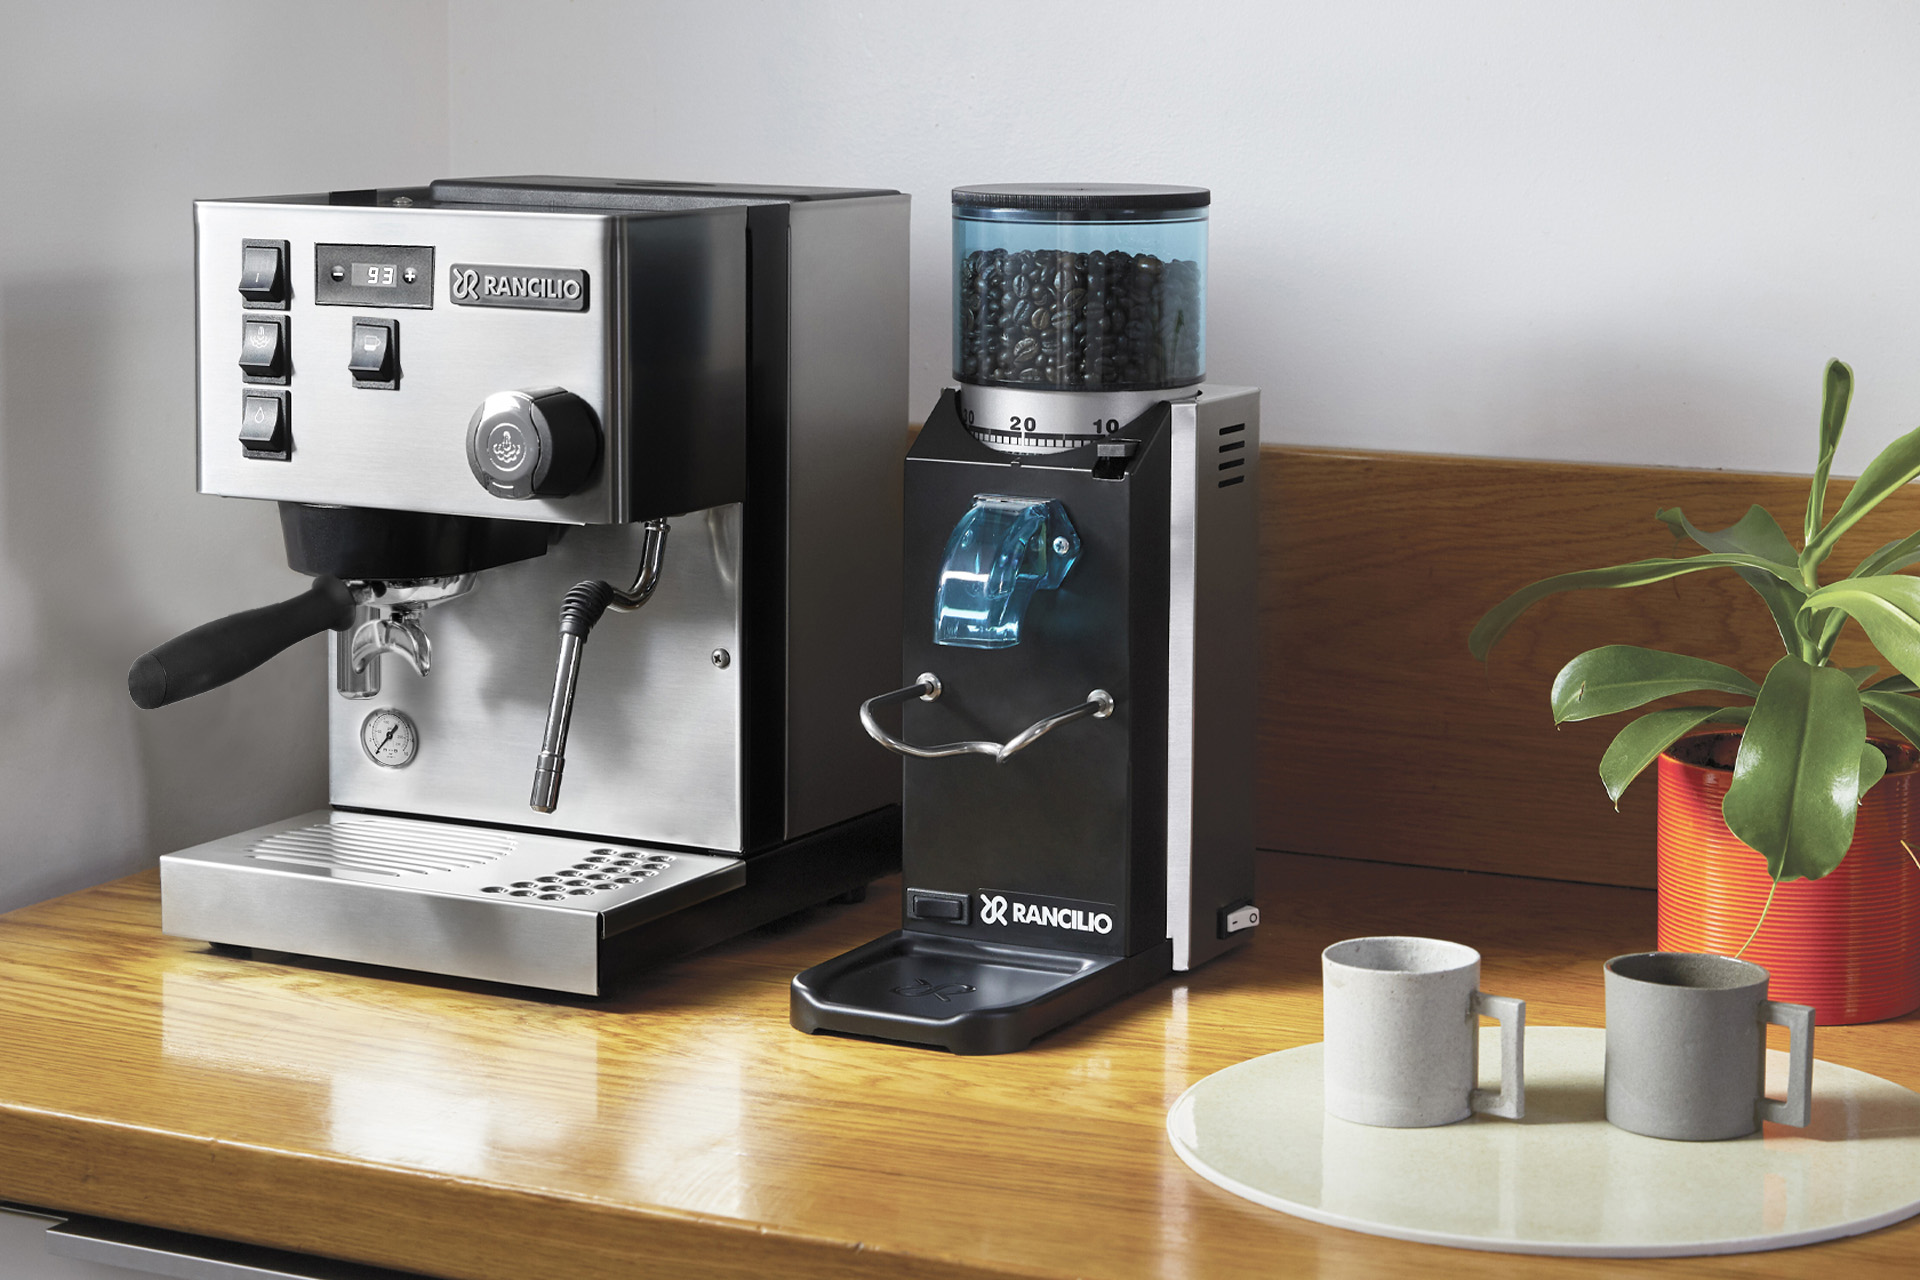 Model Rocky: Rancilio's Coffee Machines and Grinders - Rancilio Group